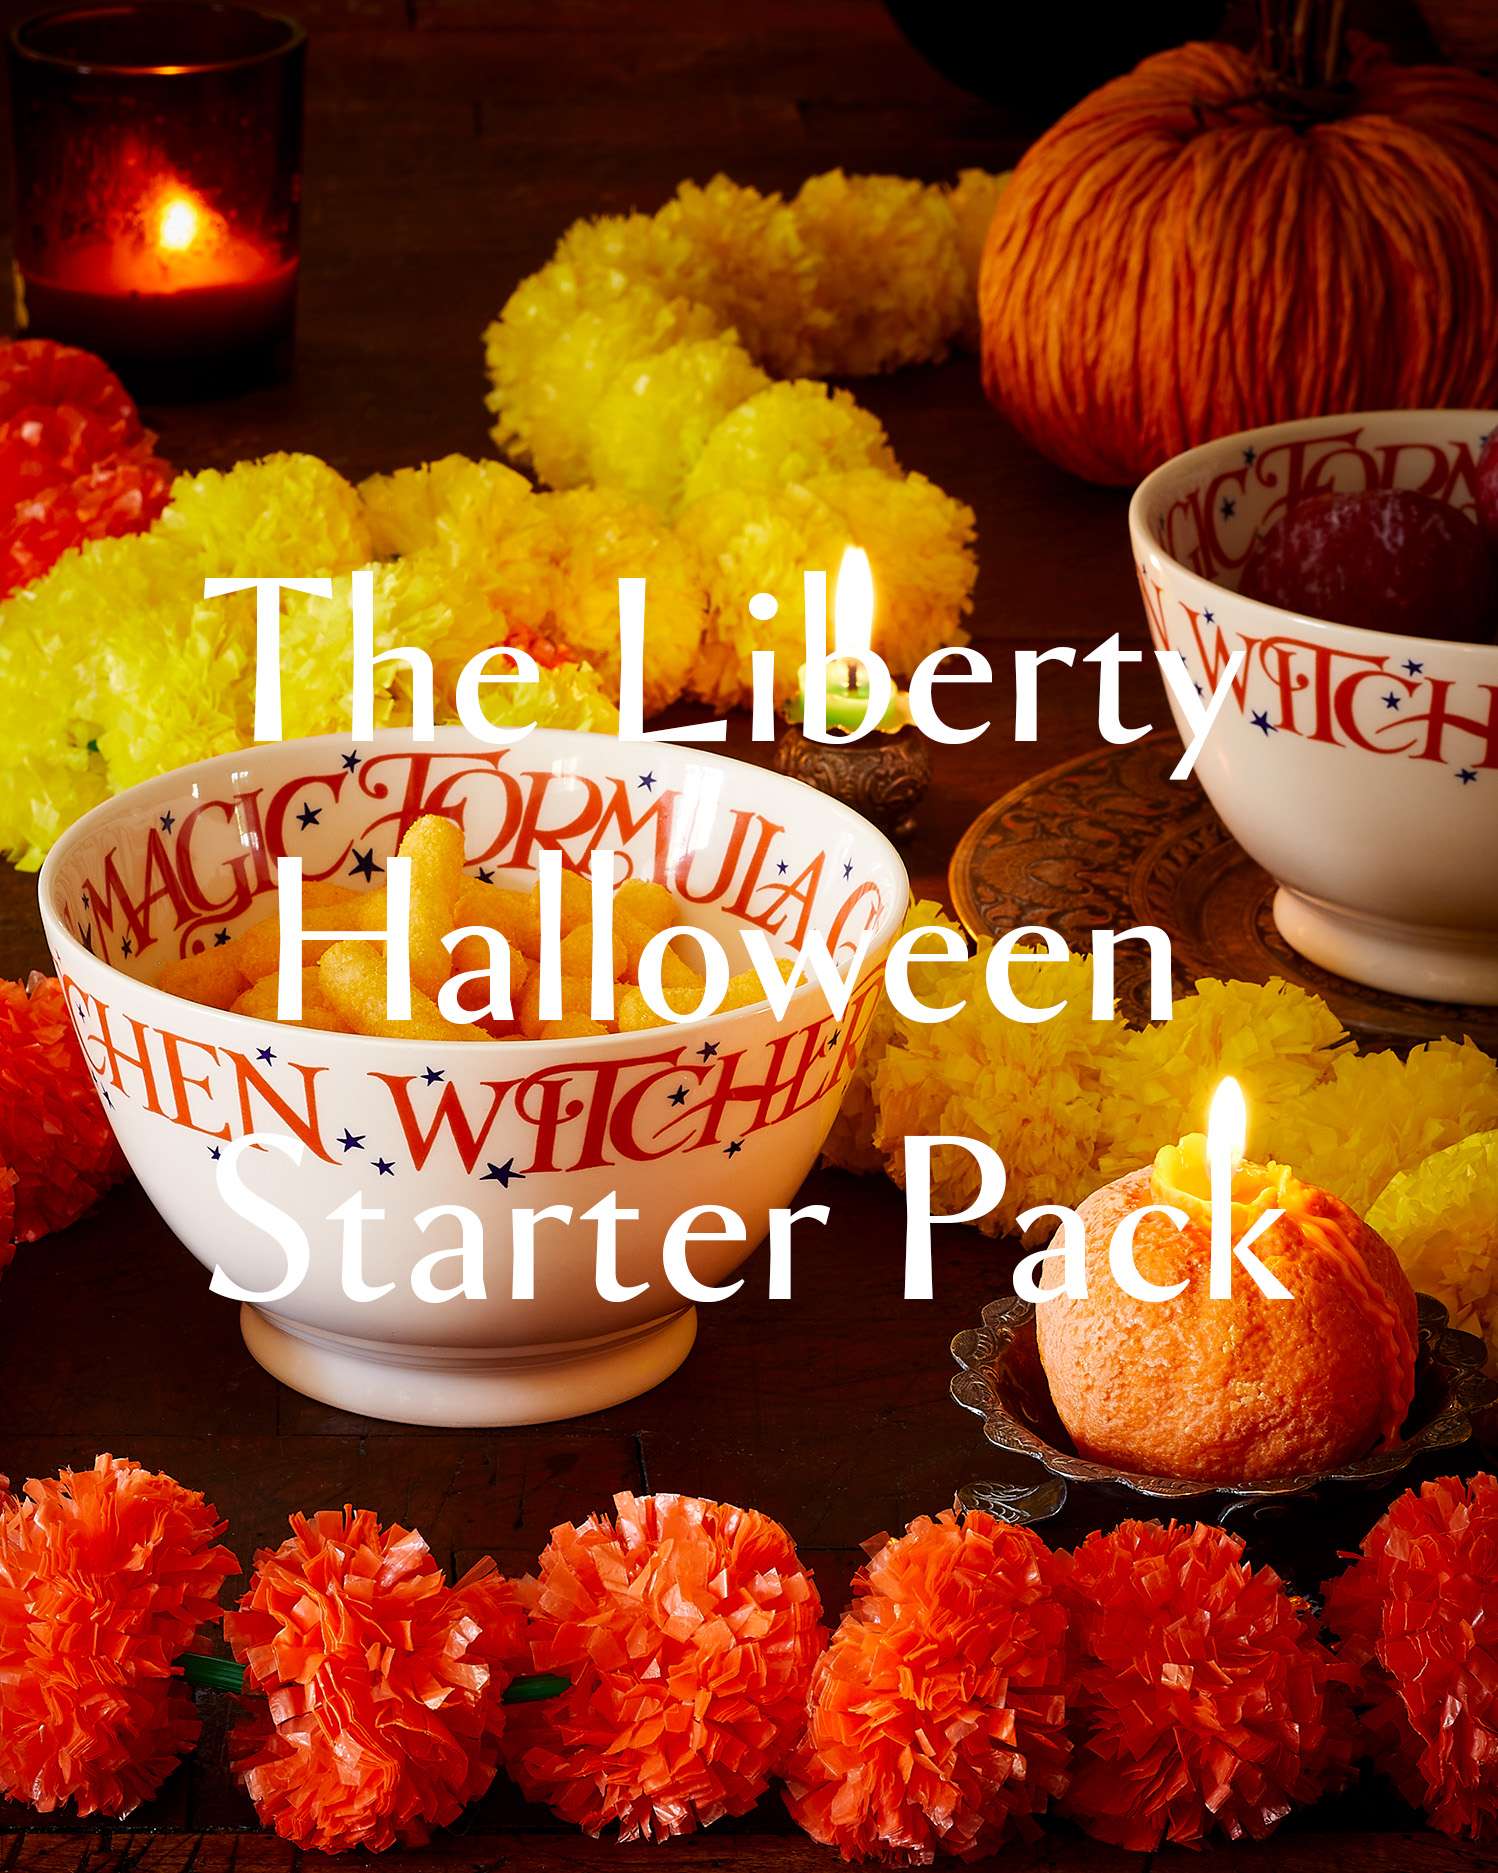 The Liberty Halloween Starter Pack